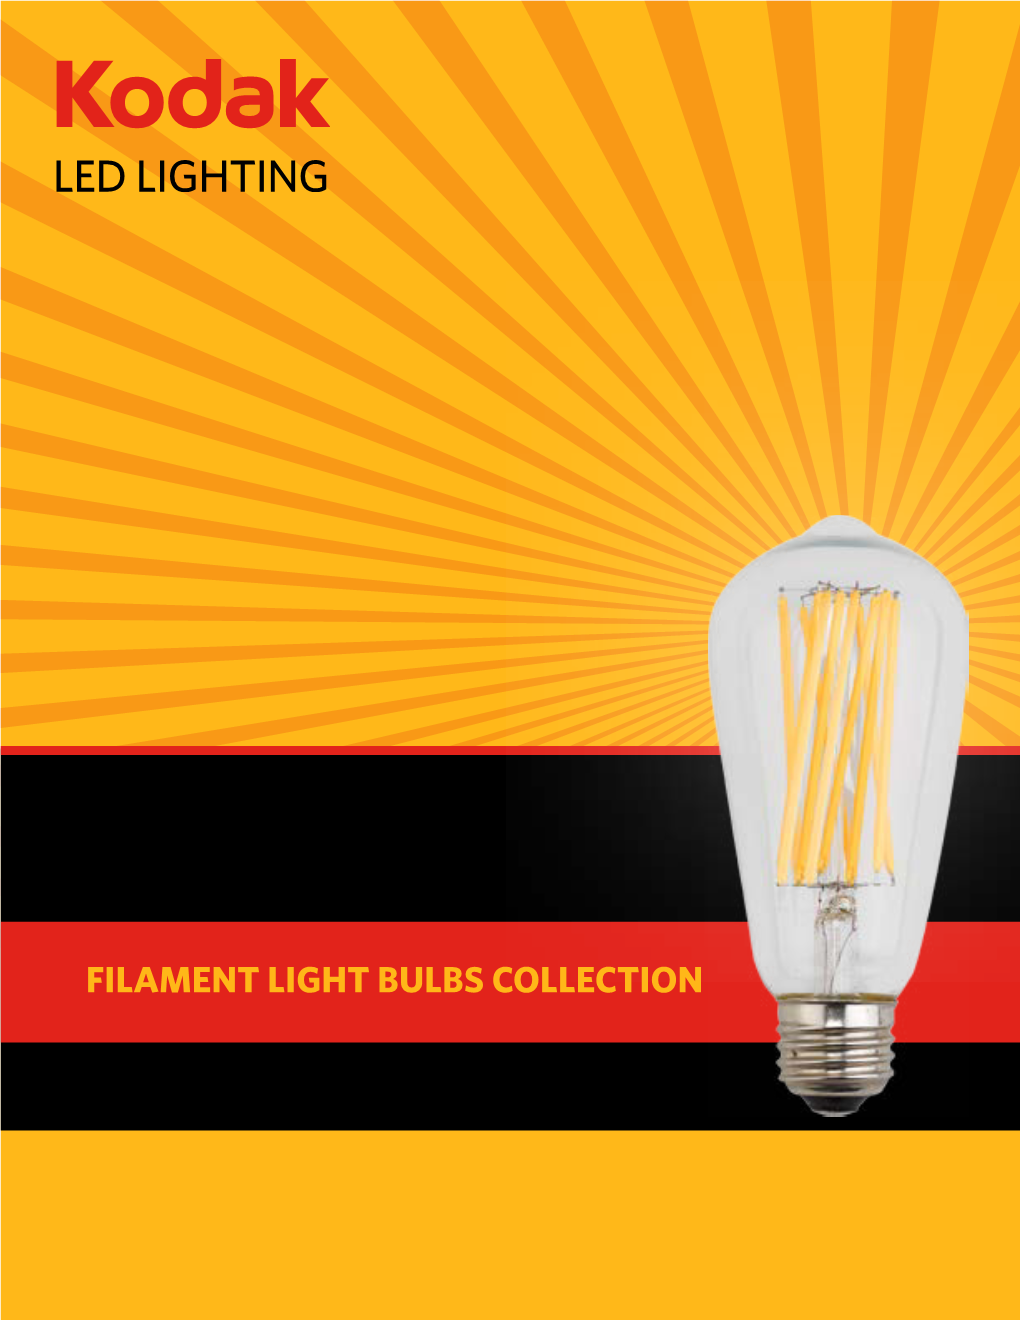 Filament Light Bulbs Collection 7.5W Item # 67046 6 Filaments Amber